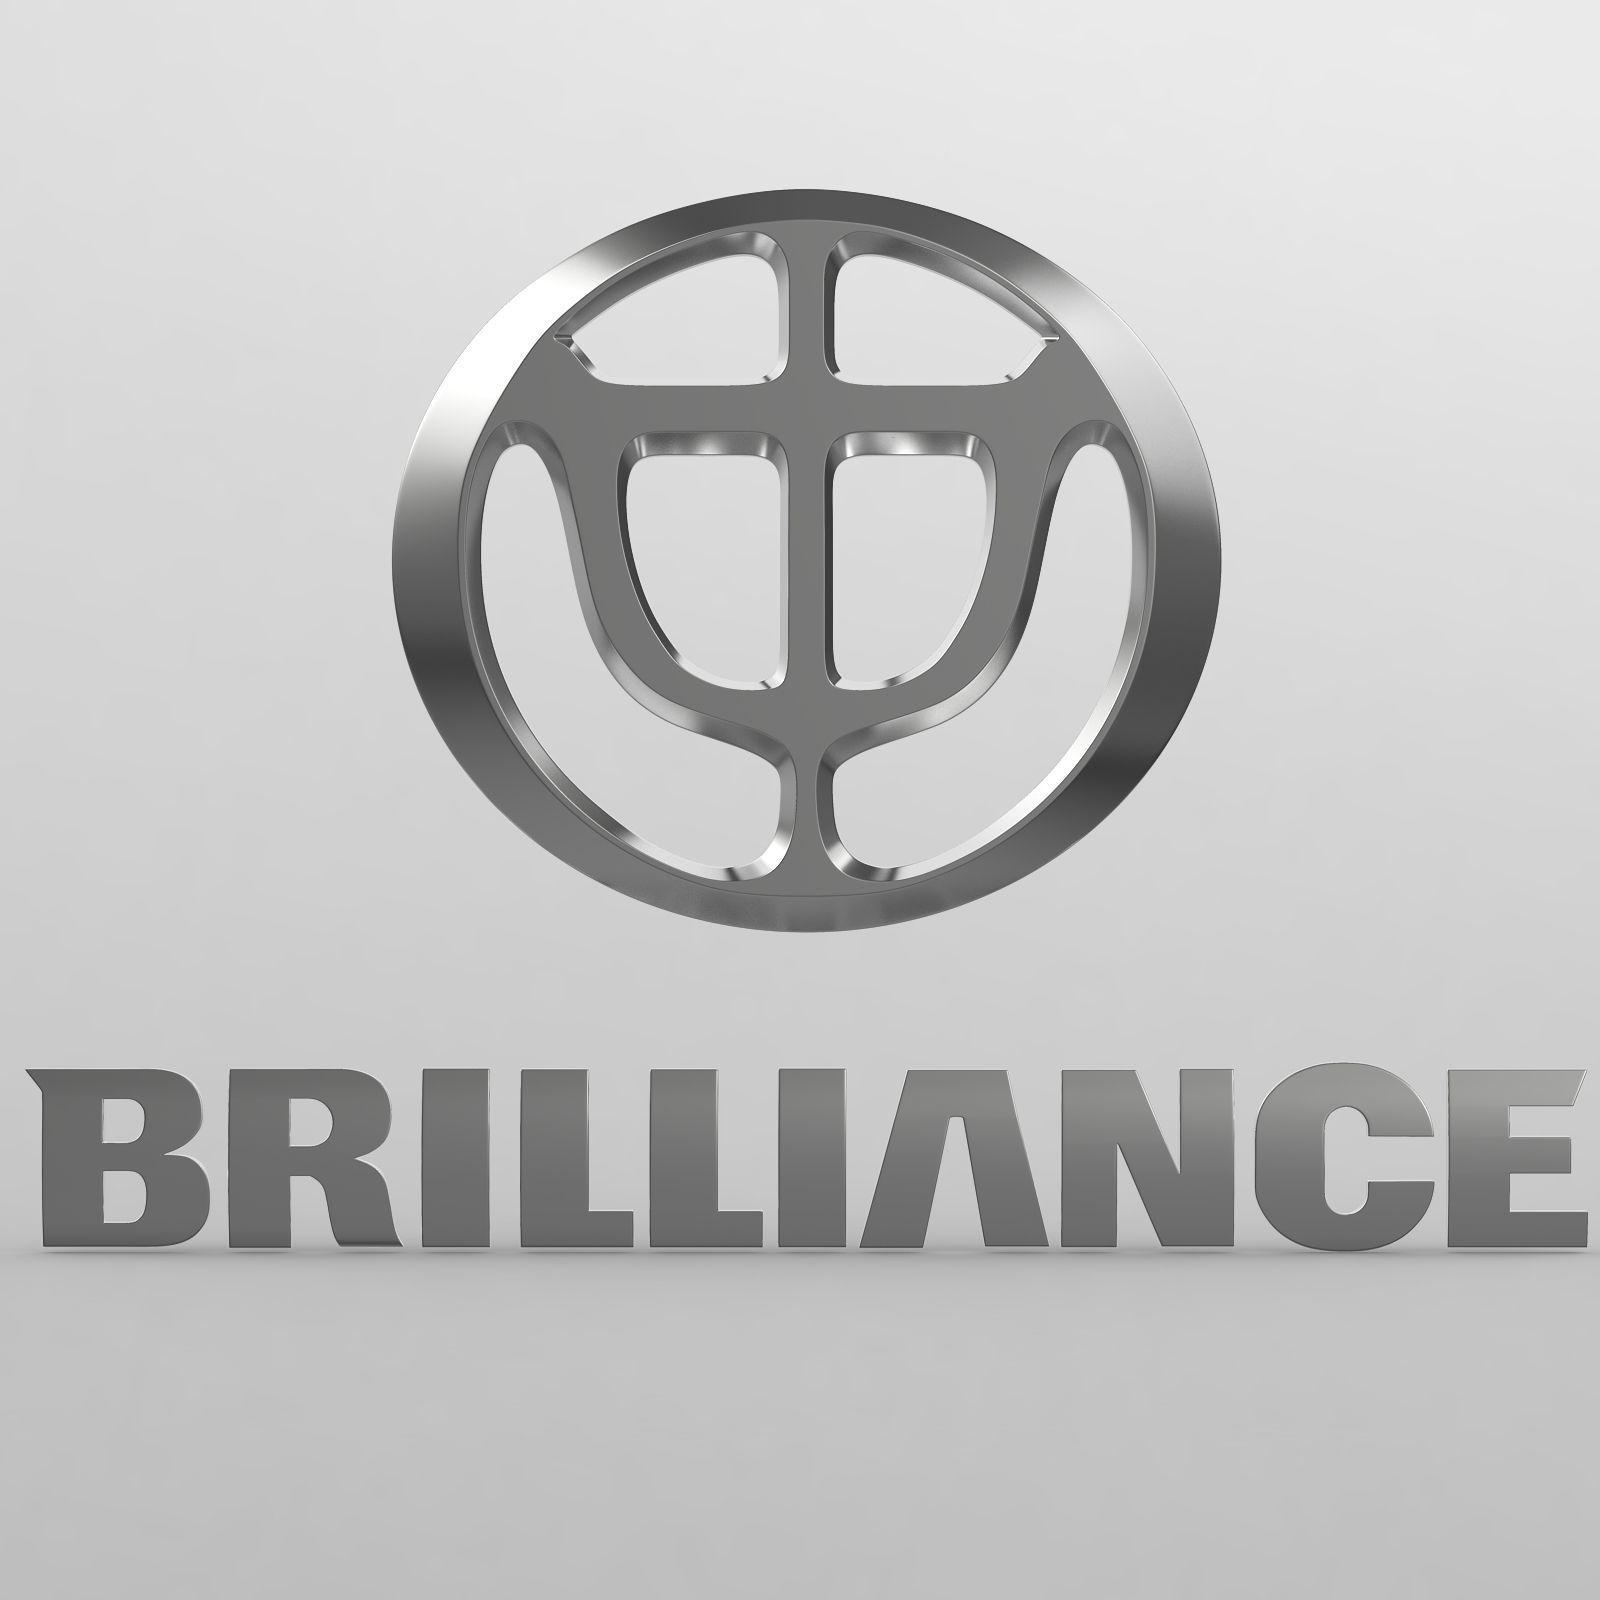 Brilliance Logo - 3D brilliance logo